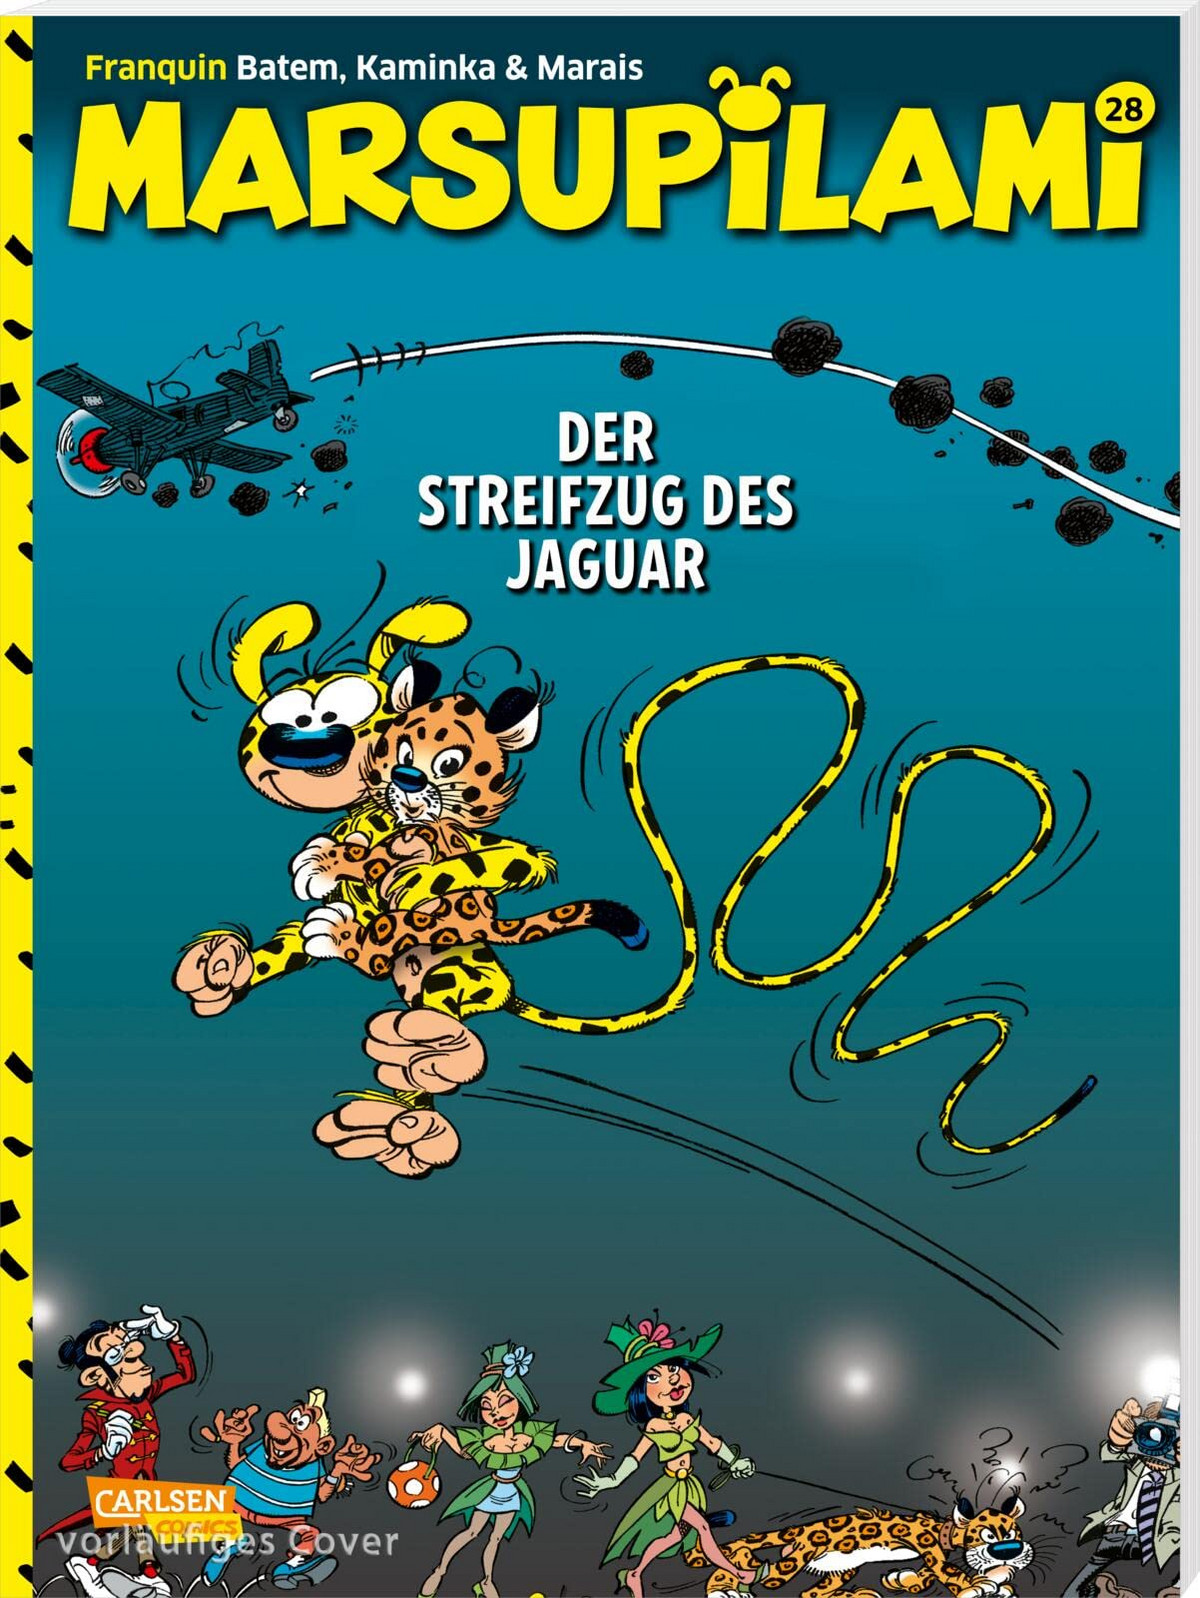 Andre Franquin Marsupilami Comic 22-28 aus Liste wählen - Carlsen Comics 